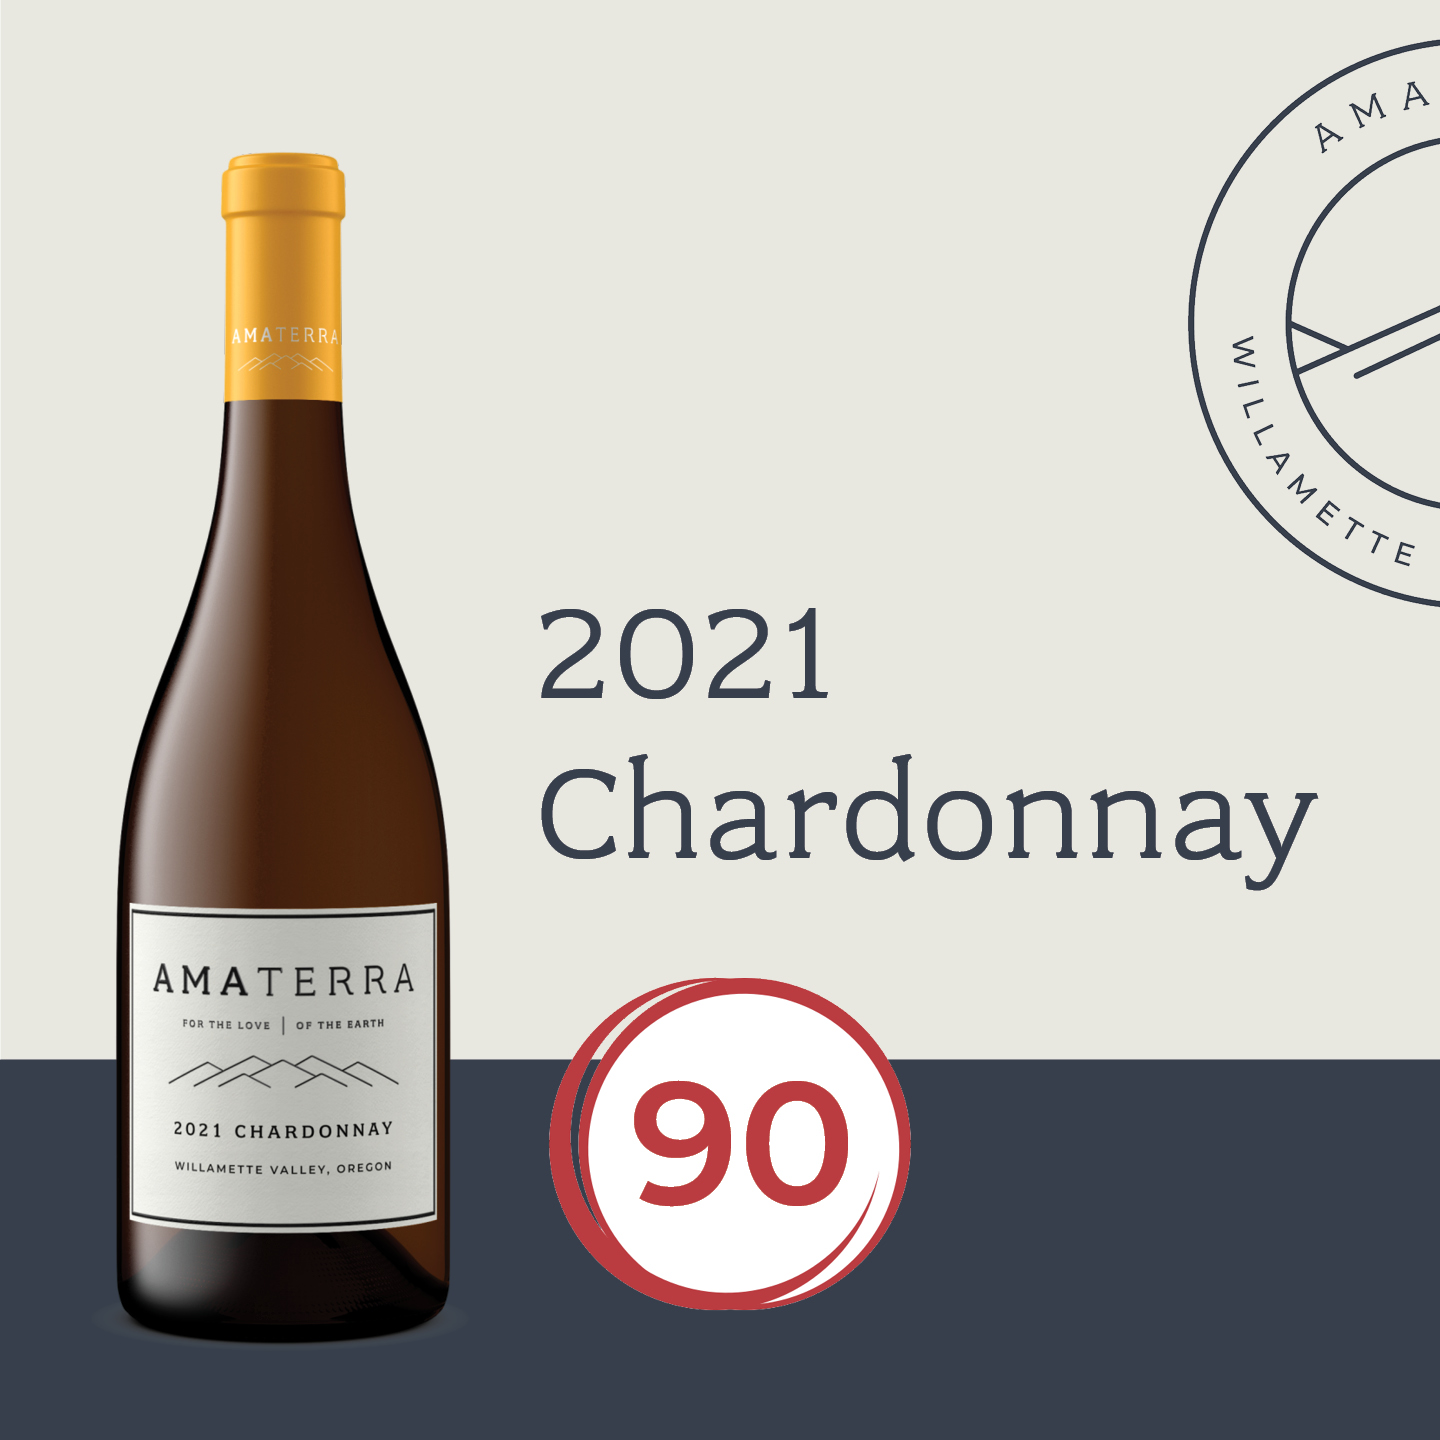 2021 Chardonnay Vinous Reviews Award